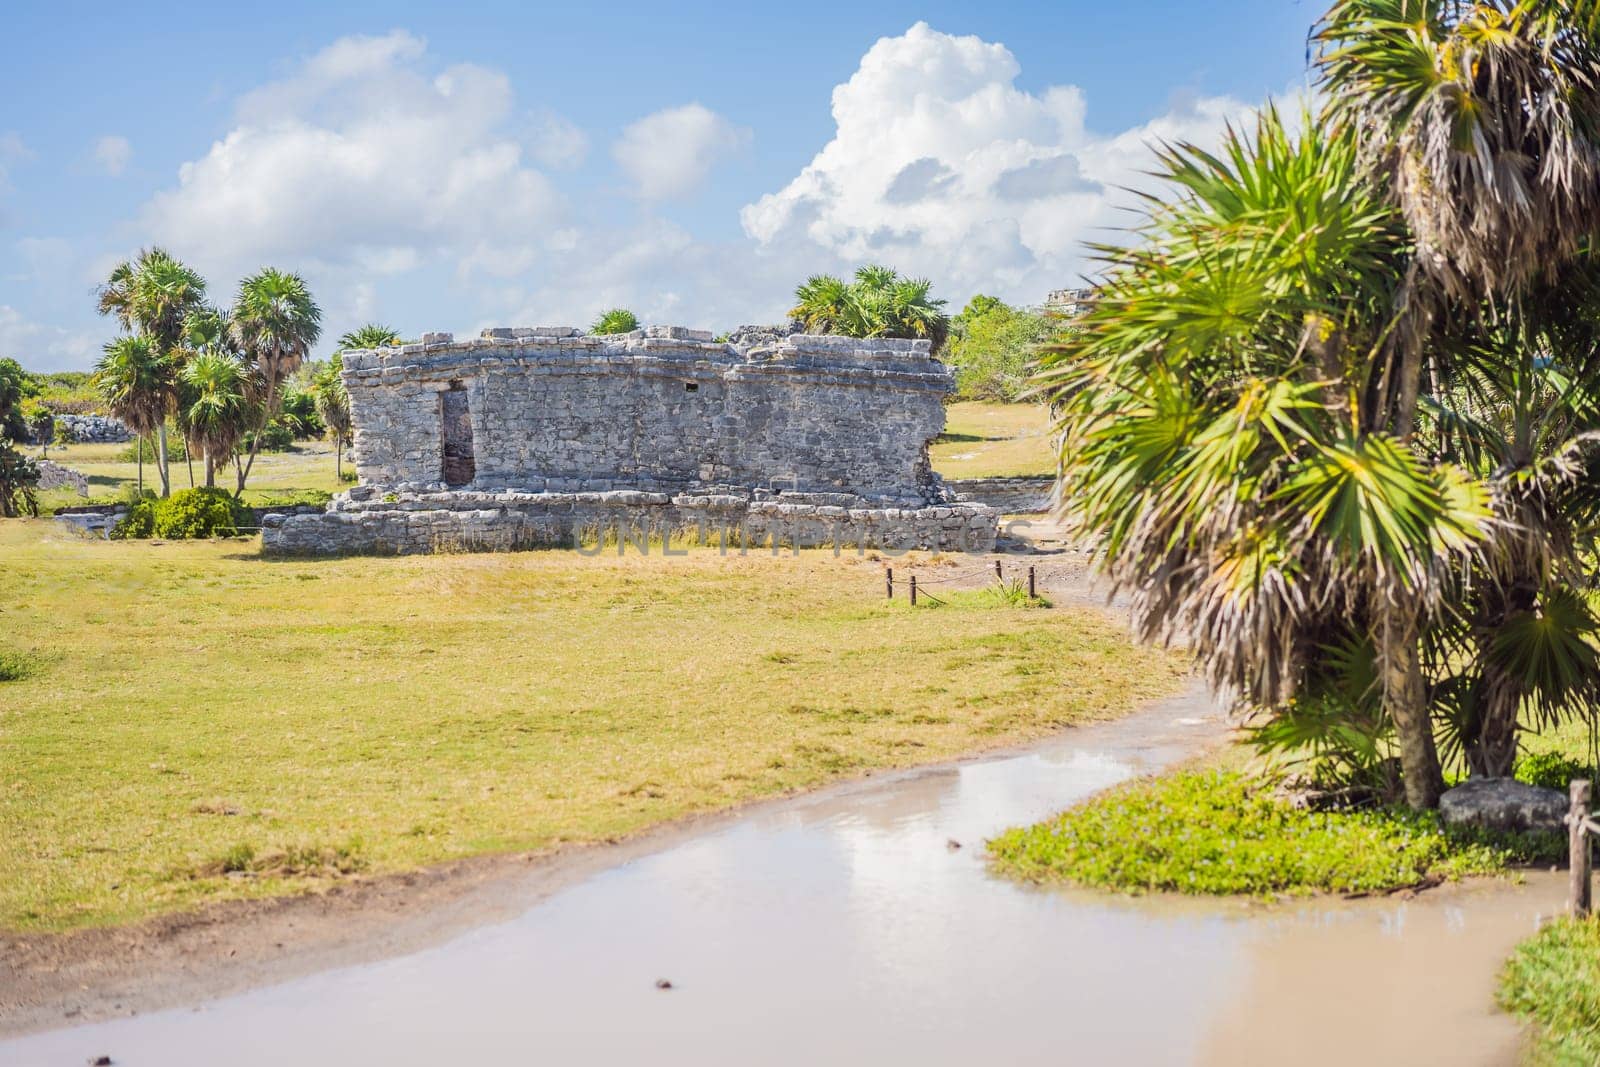 Pre-Columbian Mayan walled city of Tulum, Quintana Roo, Mexico, North America, Tulum, Mexico. El Castillo - castle the Mayan city of Tulum main temple by galitskaya